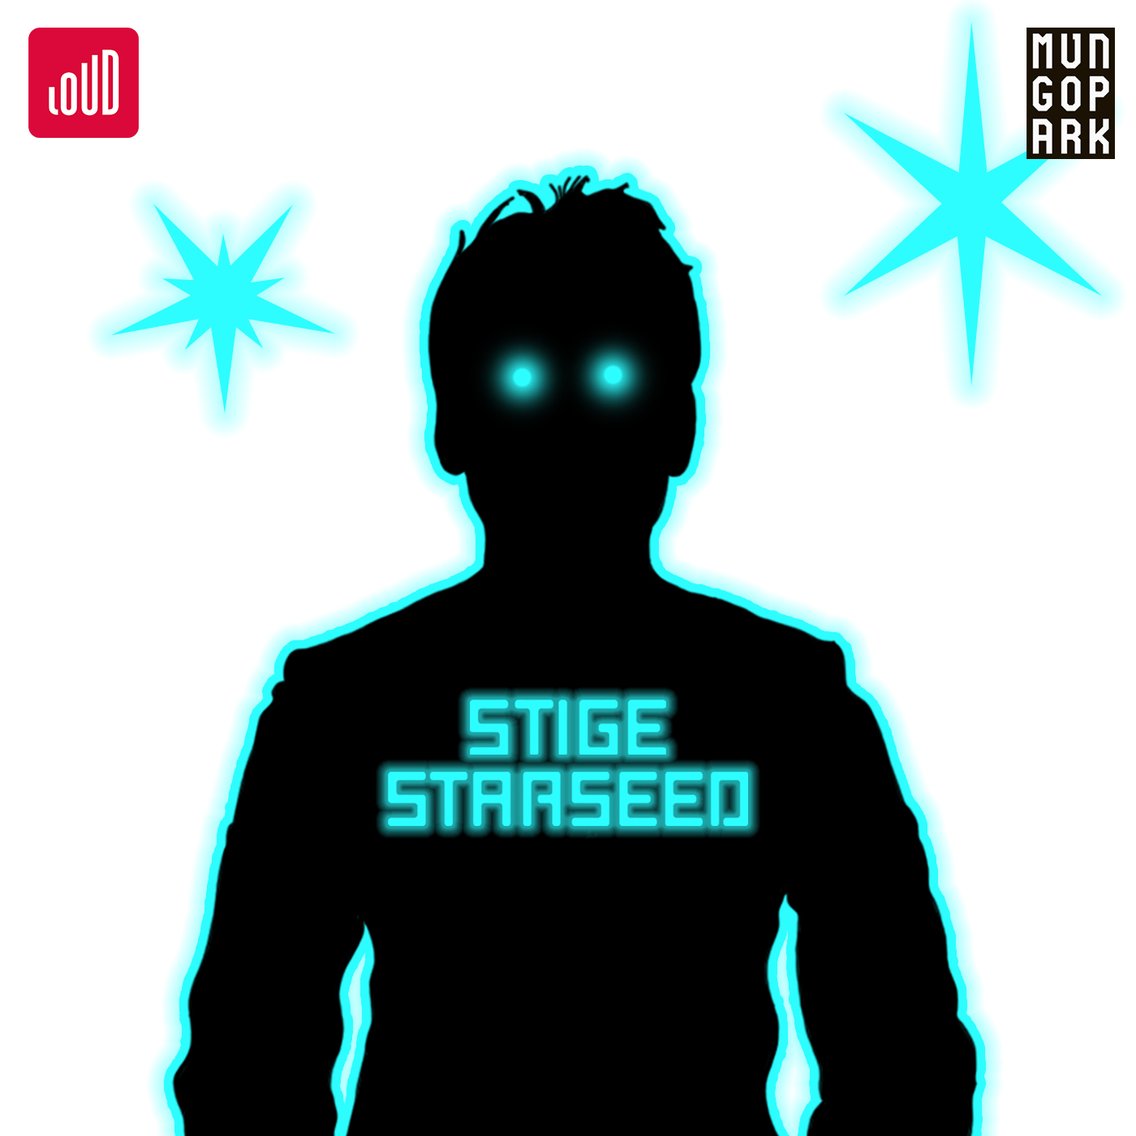 Stige Starseed - Cover Image